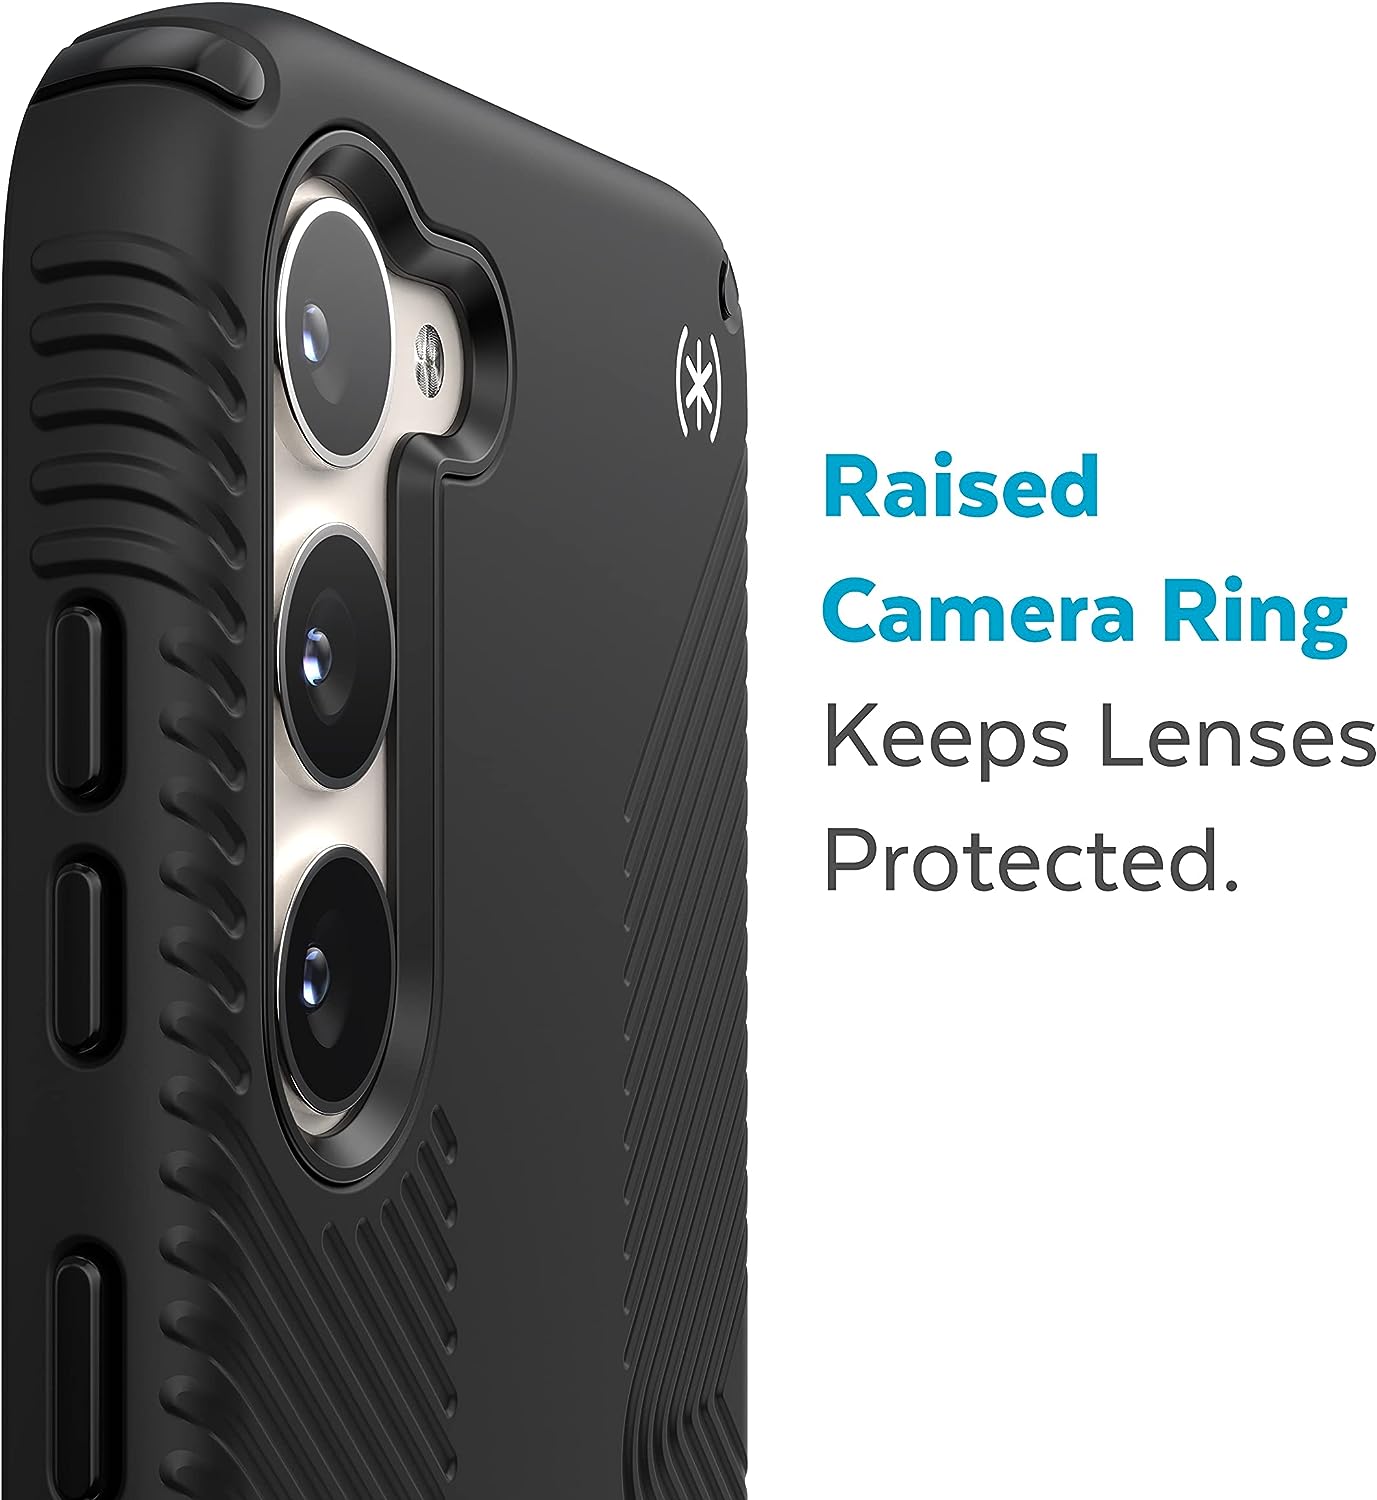 Speck Presidio 2 Grip Samsung Galaxy S23 Plus / S23+ Case with Slim Design Drop Protection - (Black)